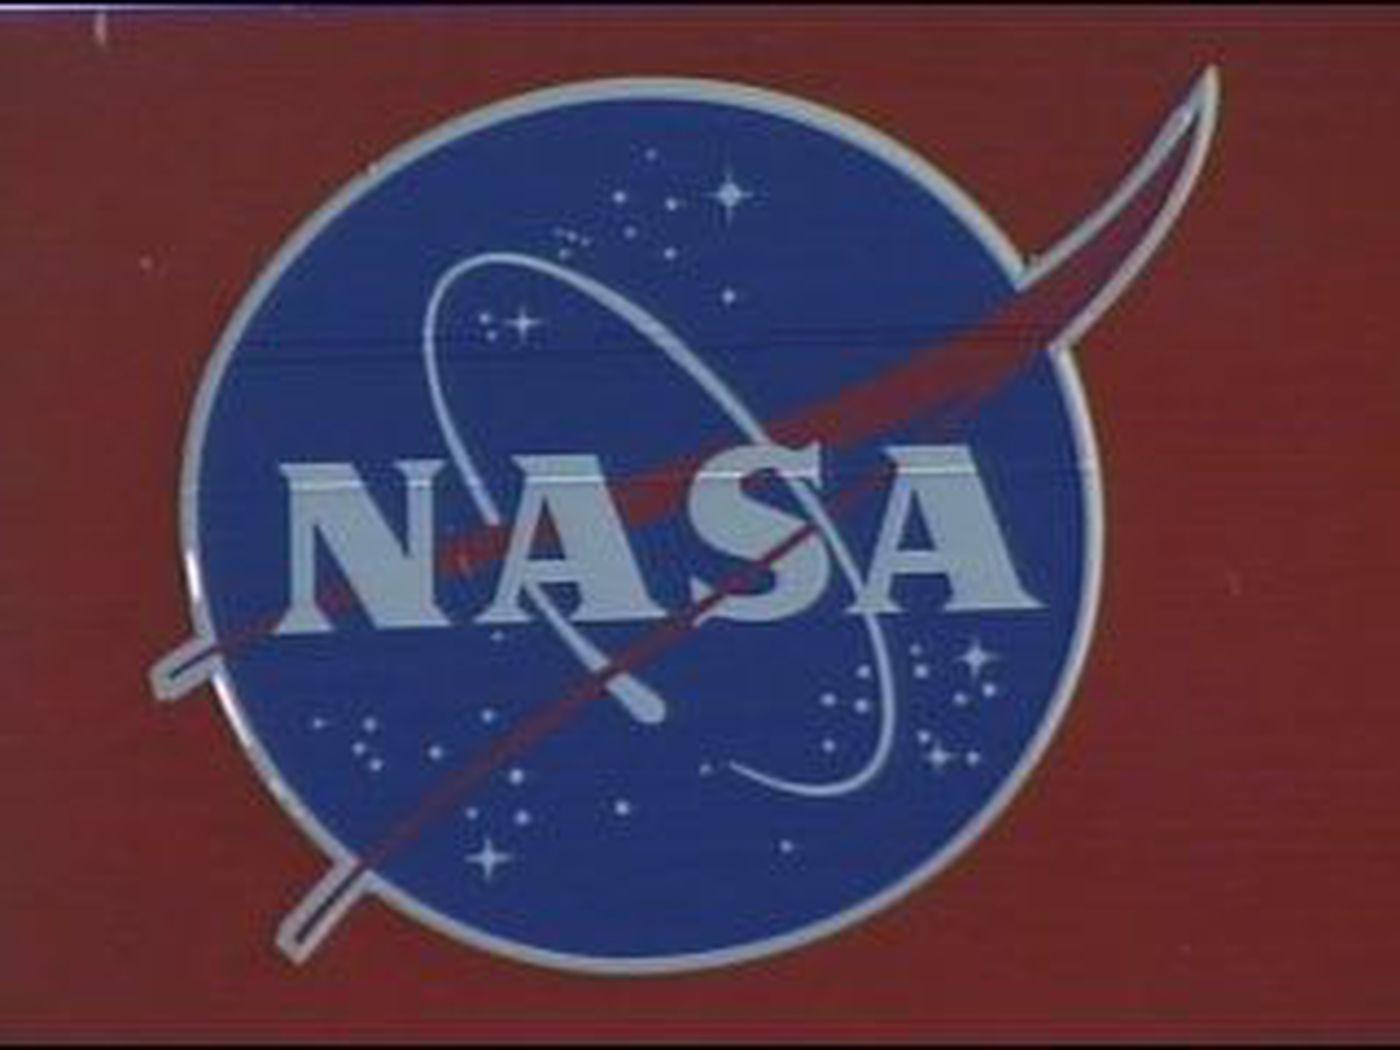 MSFC Logo - NASA holds "Take Your Kid to Work" day